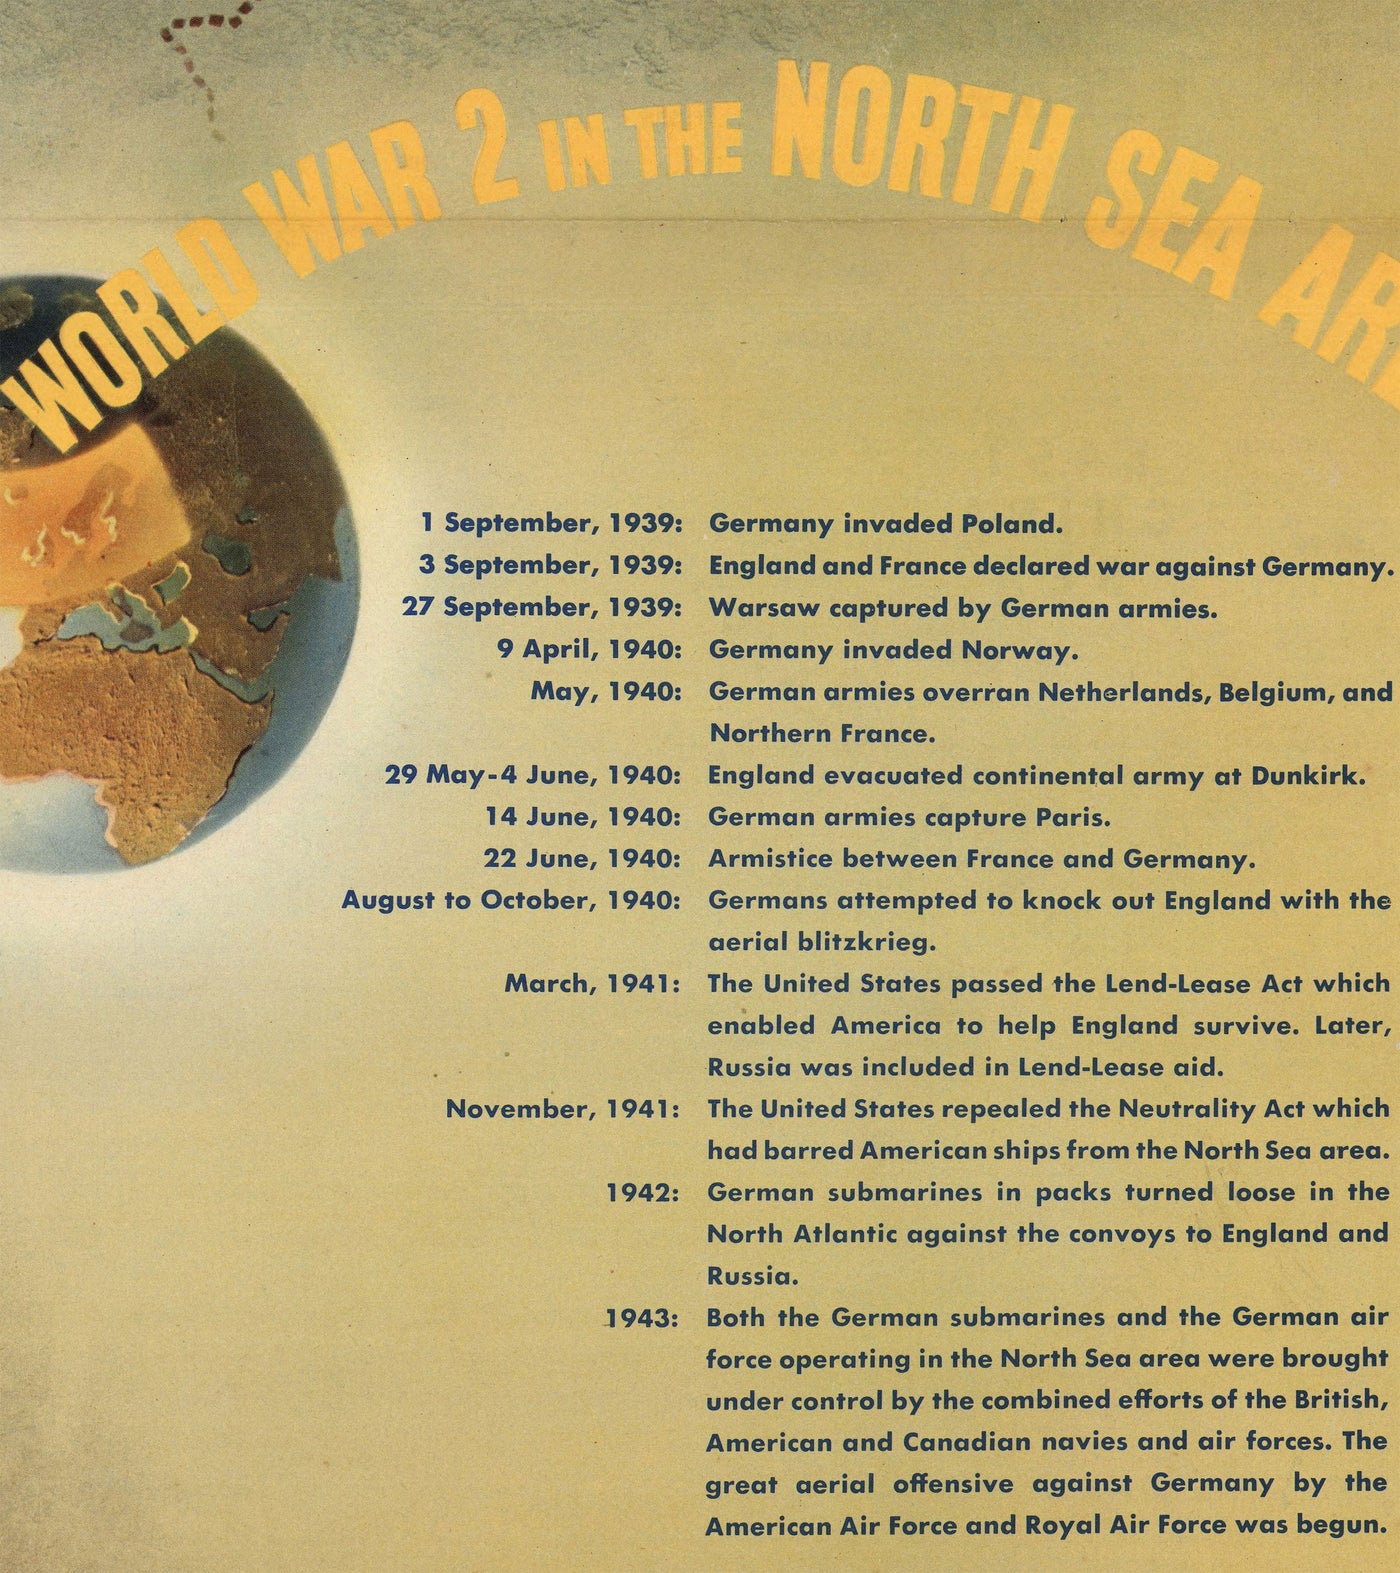 NavWarMap No. 3 - Old World War 2 Map, 1944 - Western Front, Allies vs. Nazi - US Navy Educational & Propaganda Map